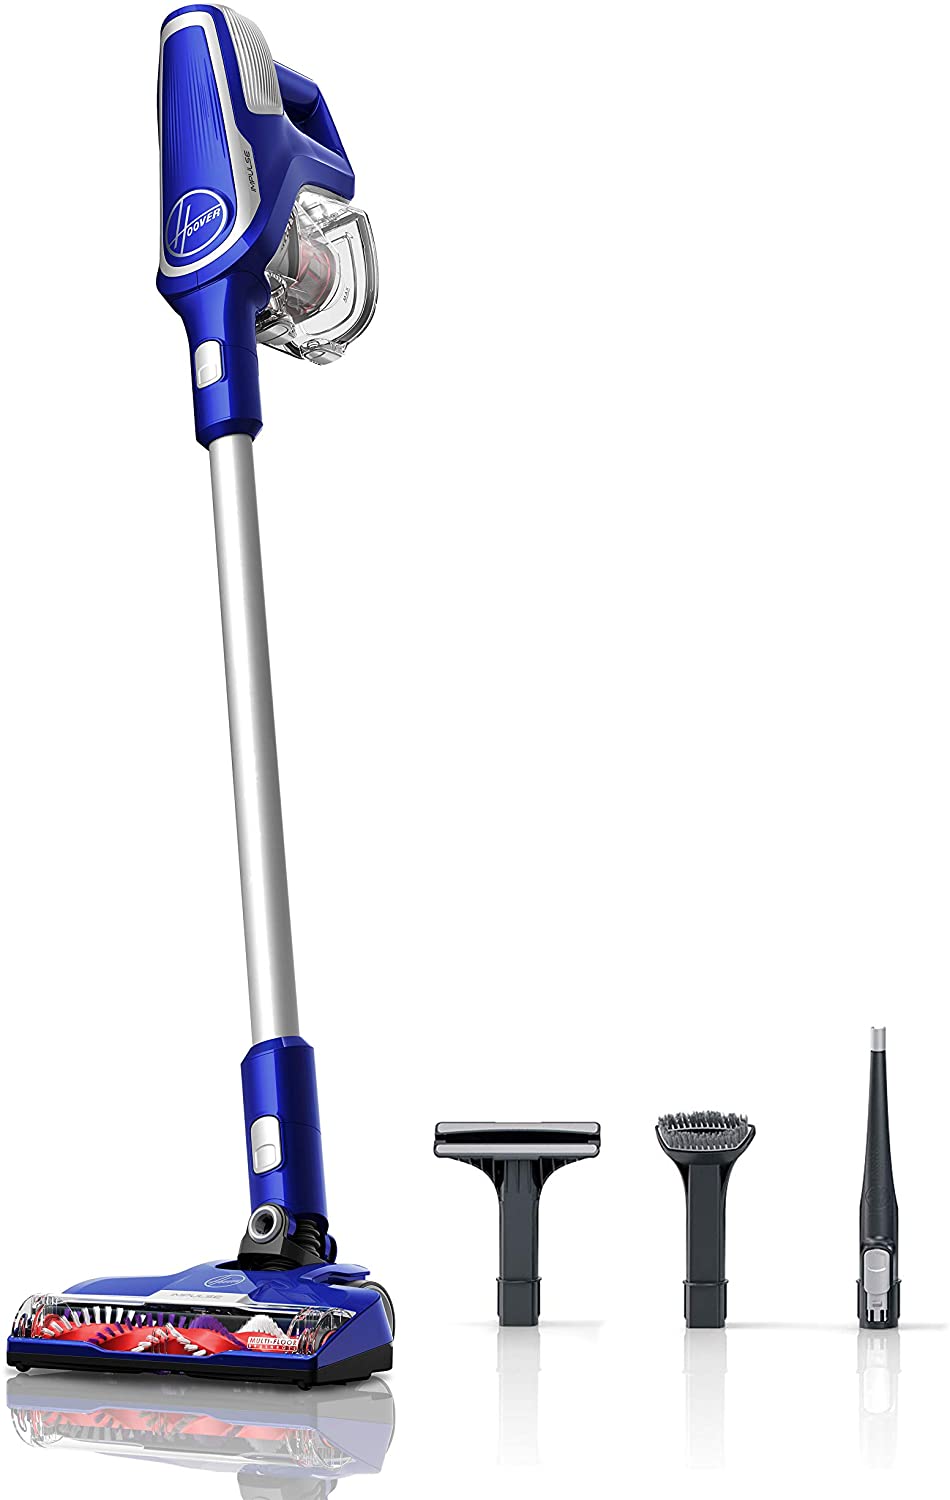 Hoover Impulse Cordless Stick Vacuum HOT Amazon Deal!